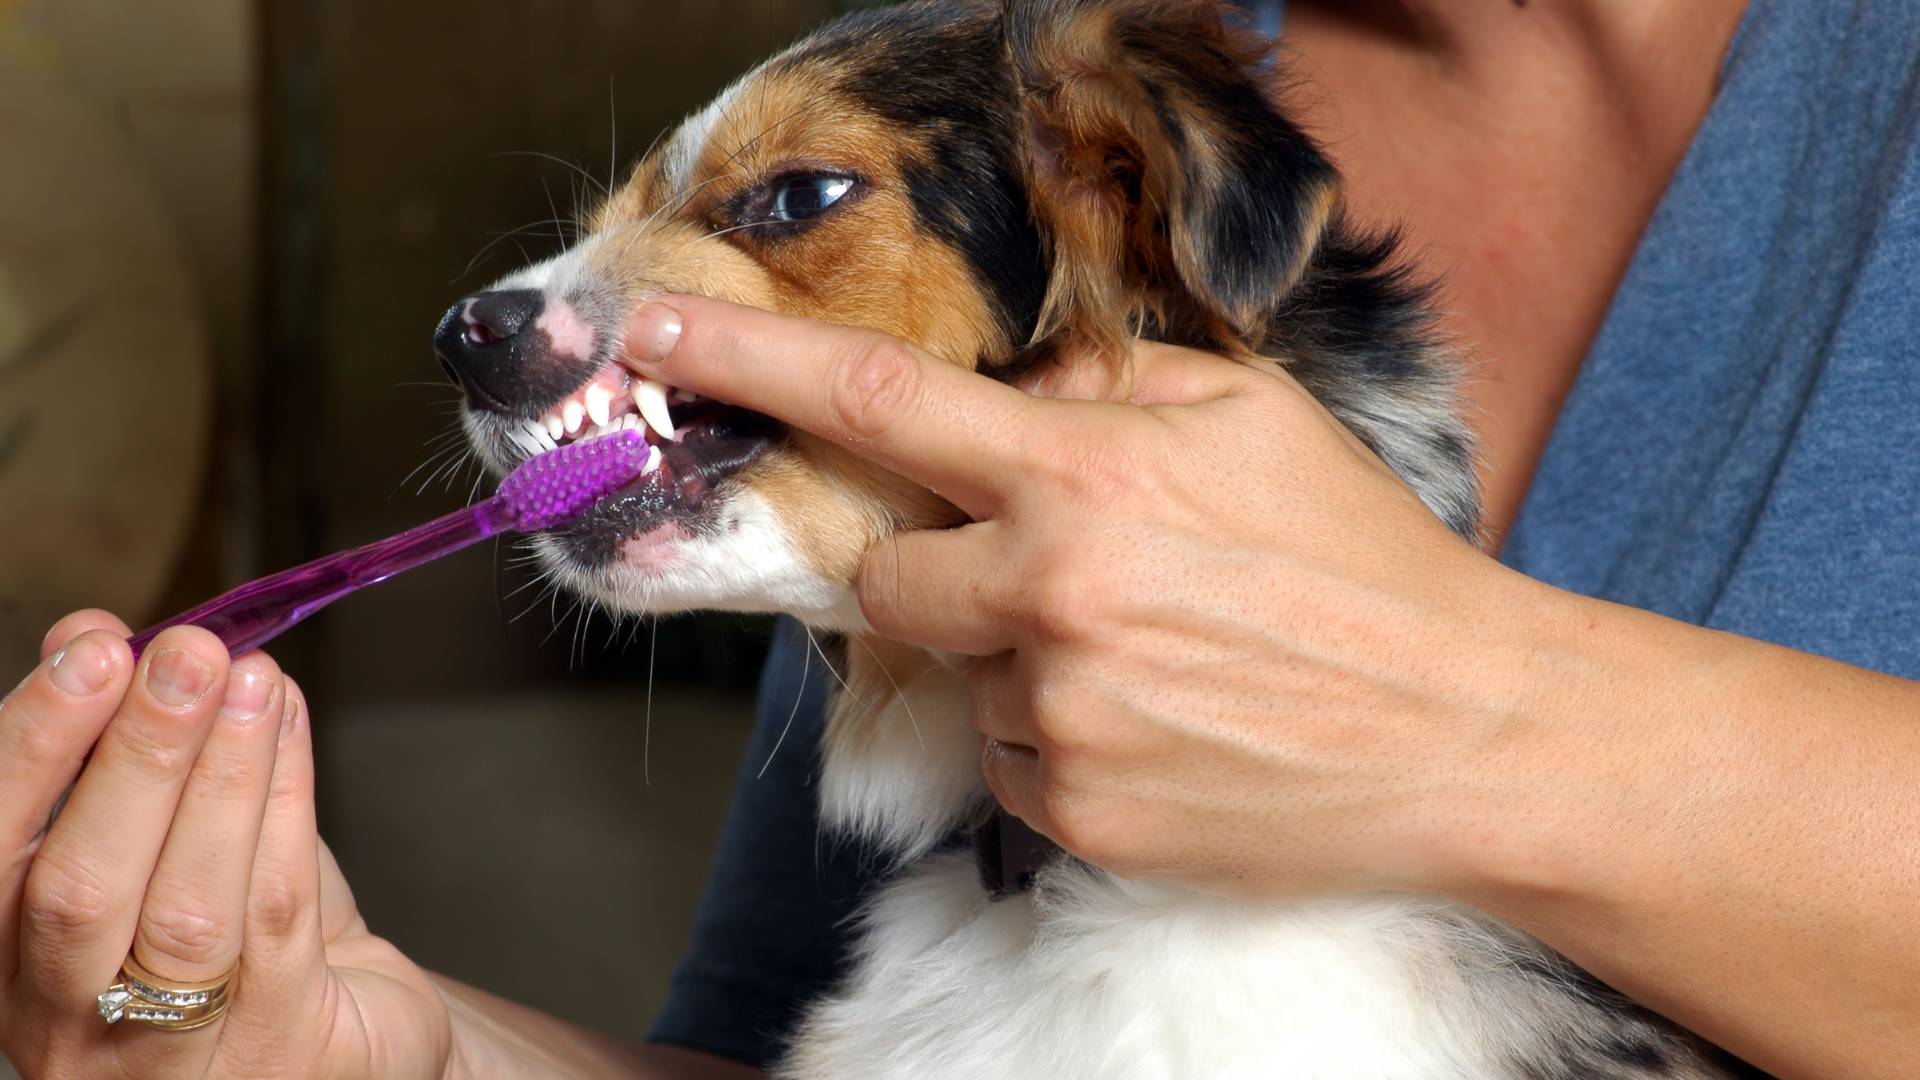 owner brushing his dog's teeth